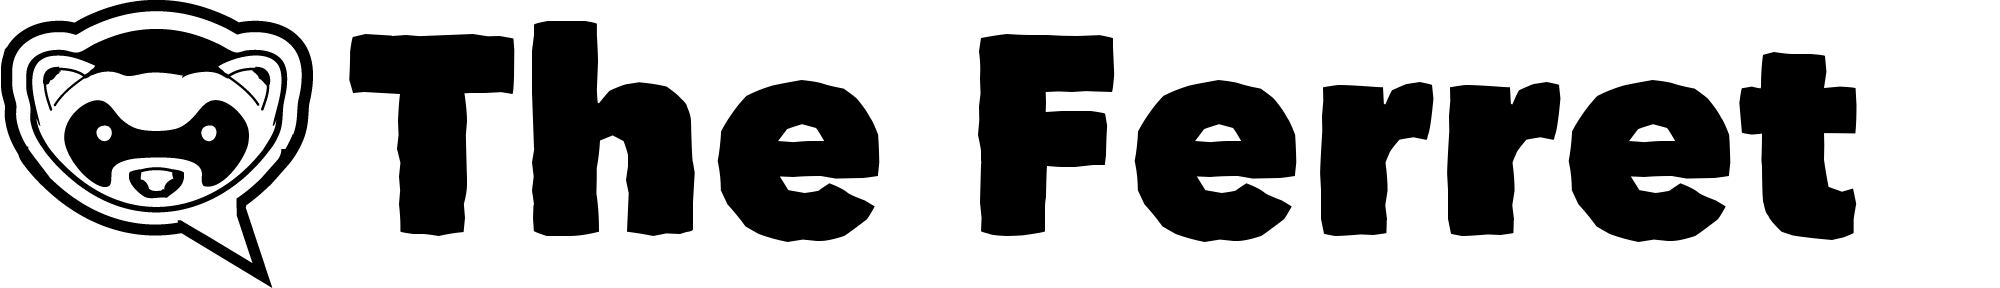 The_Ferret logo